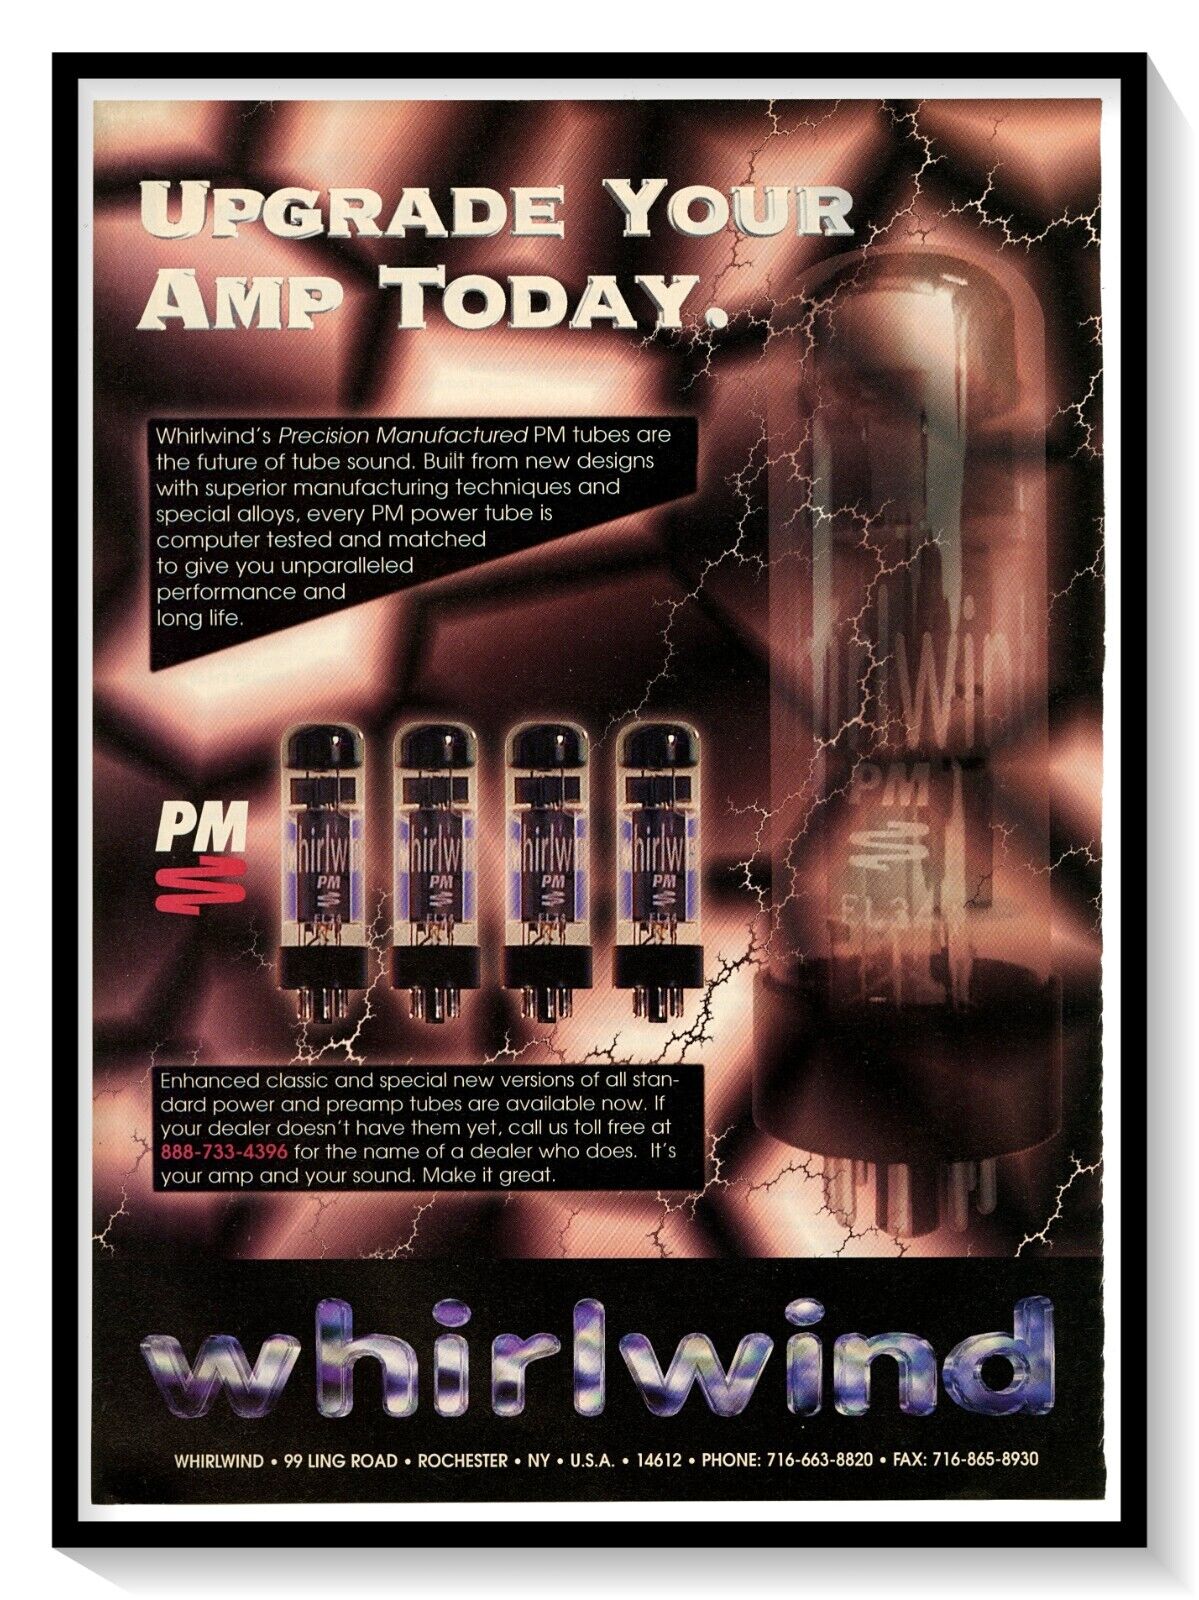 Whirlwind PM Guitar Tubes Print Ad Vintage 1997 Magazine Advertisement